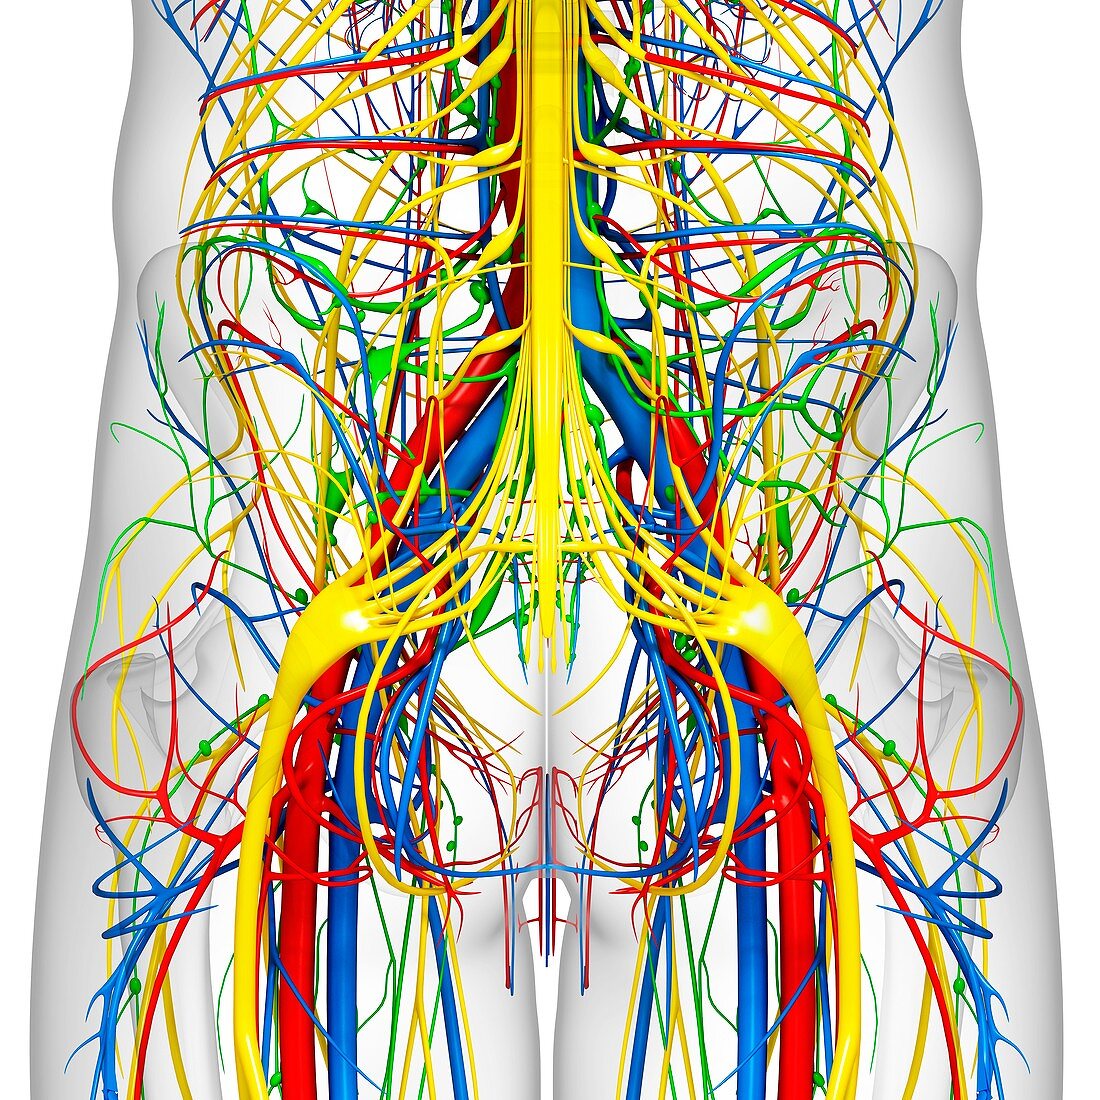 Pelvis anatomy,artwork